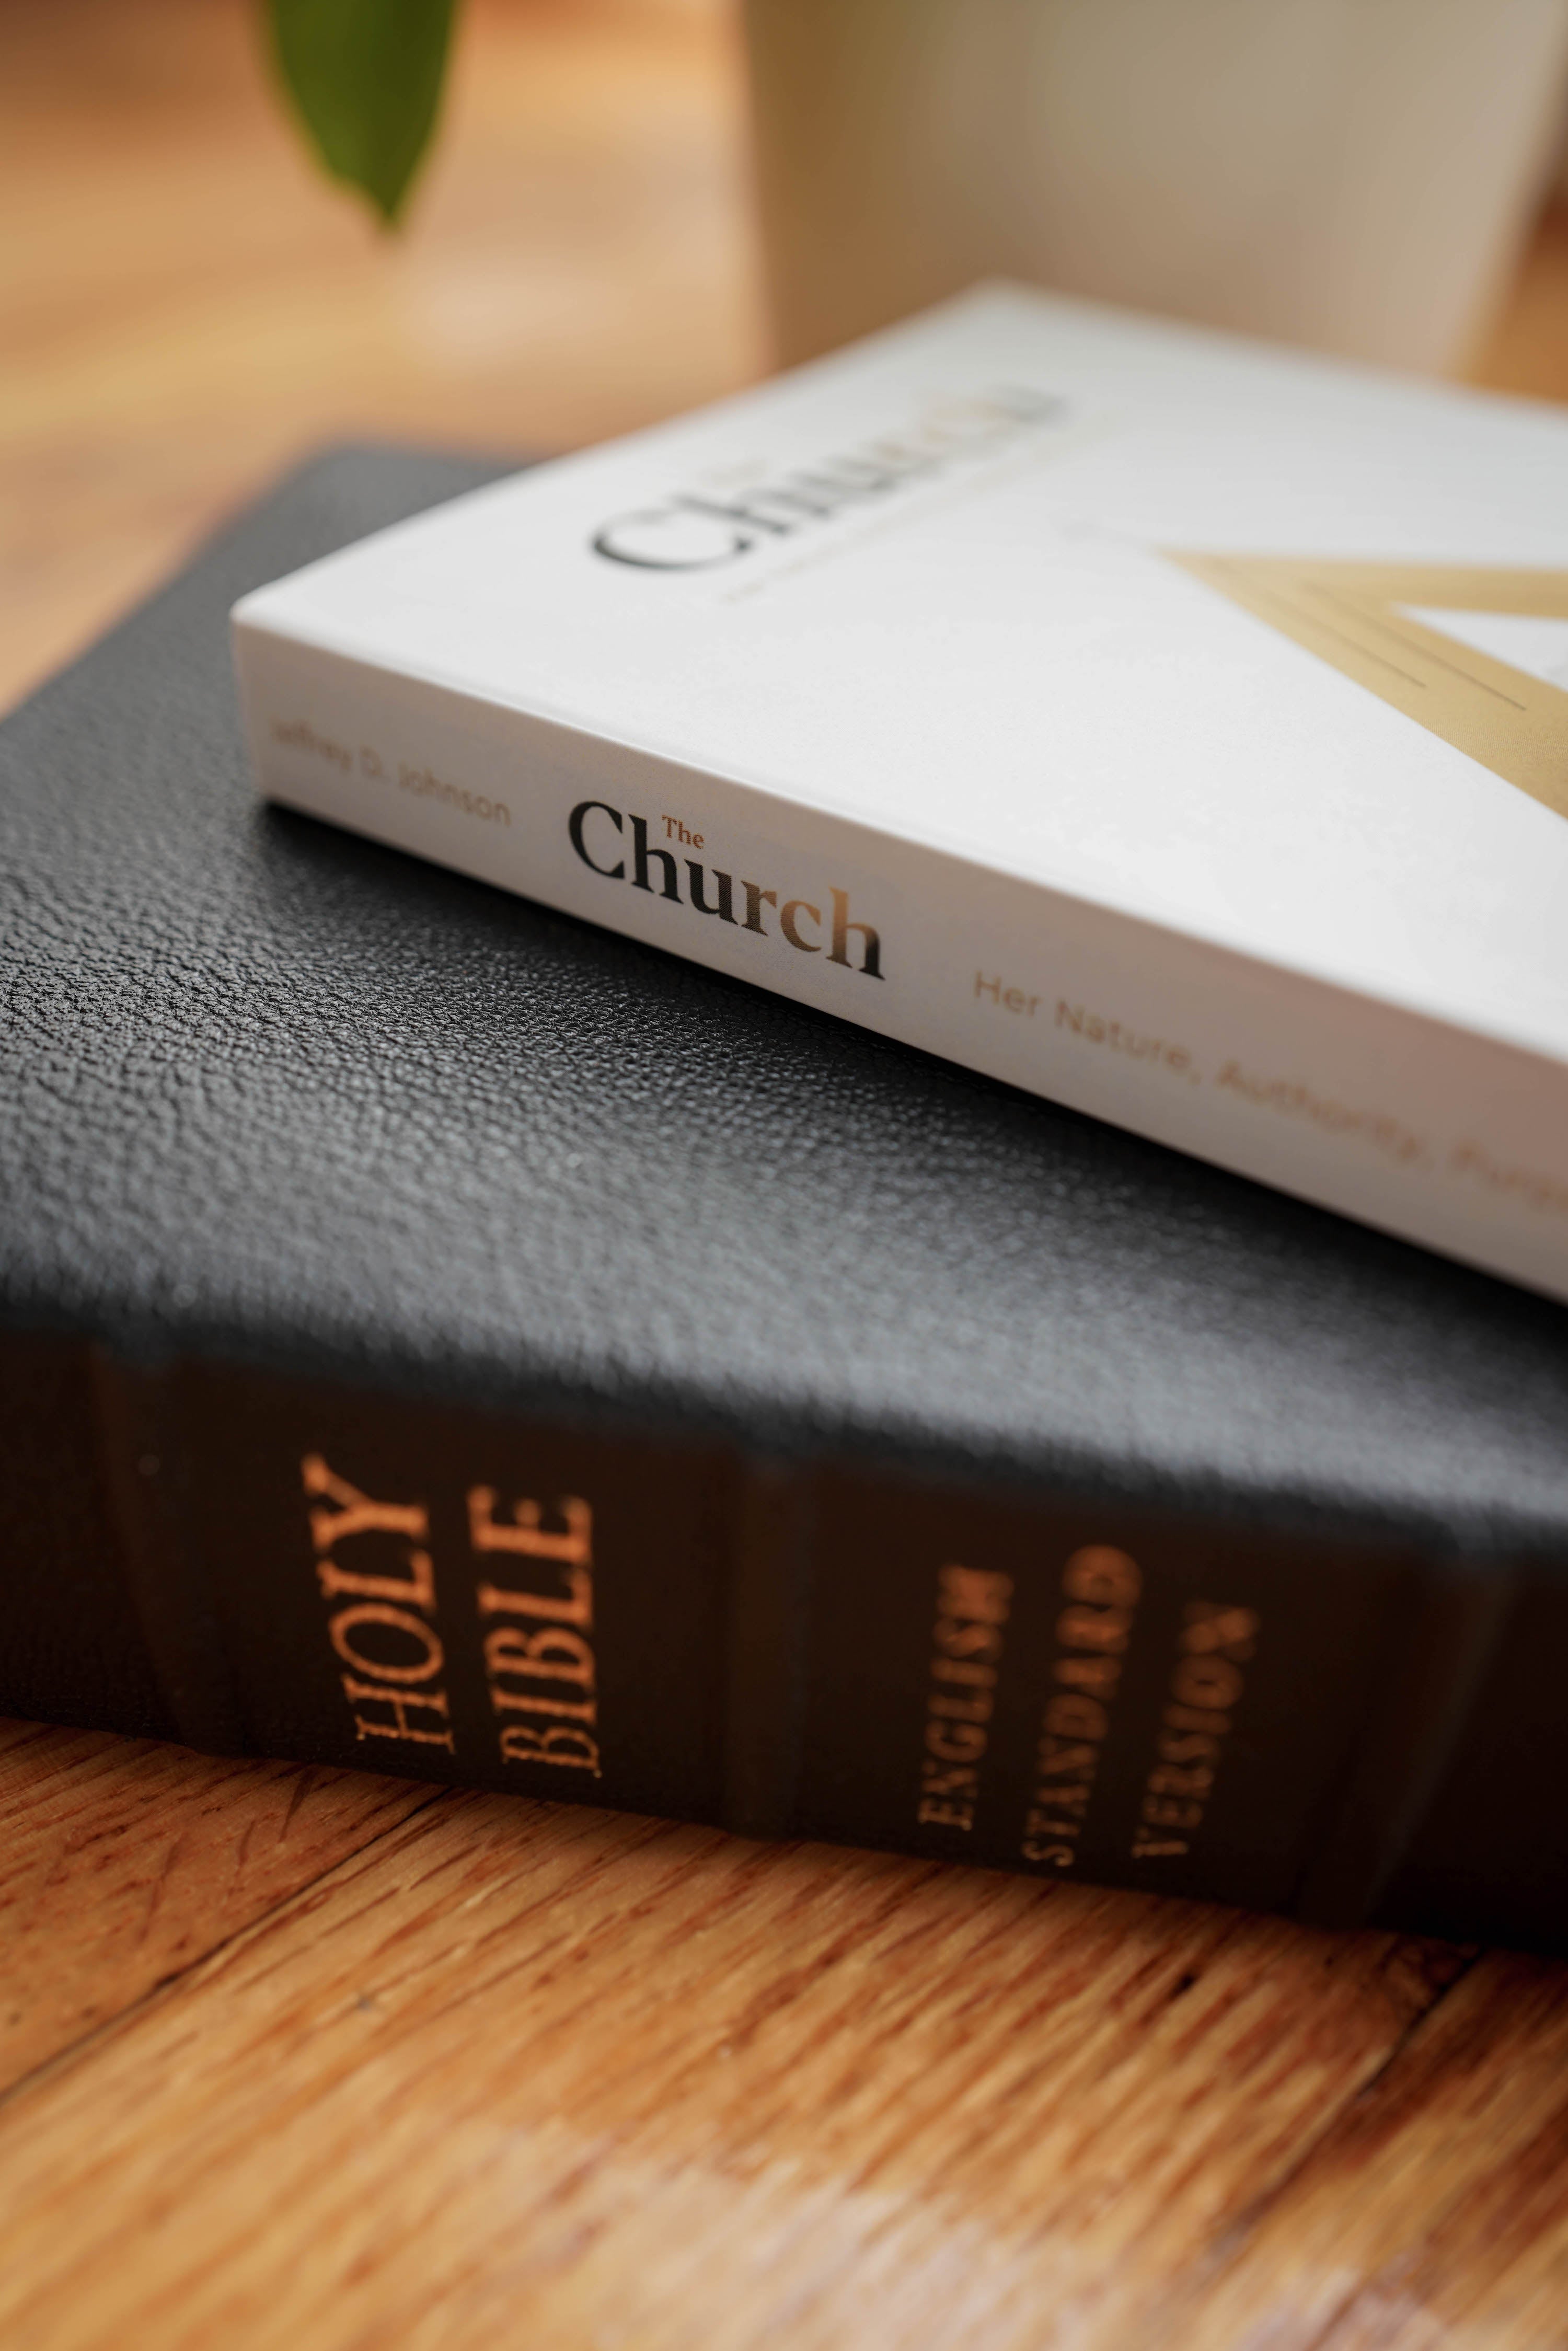 The Church: Her Nature, Authority, Purpose, and Worship - 20 Books